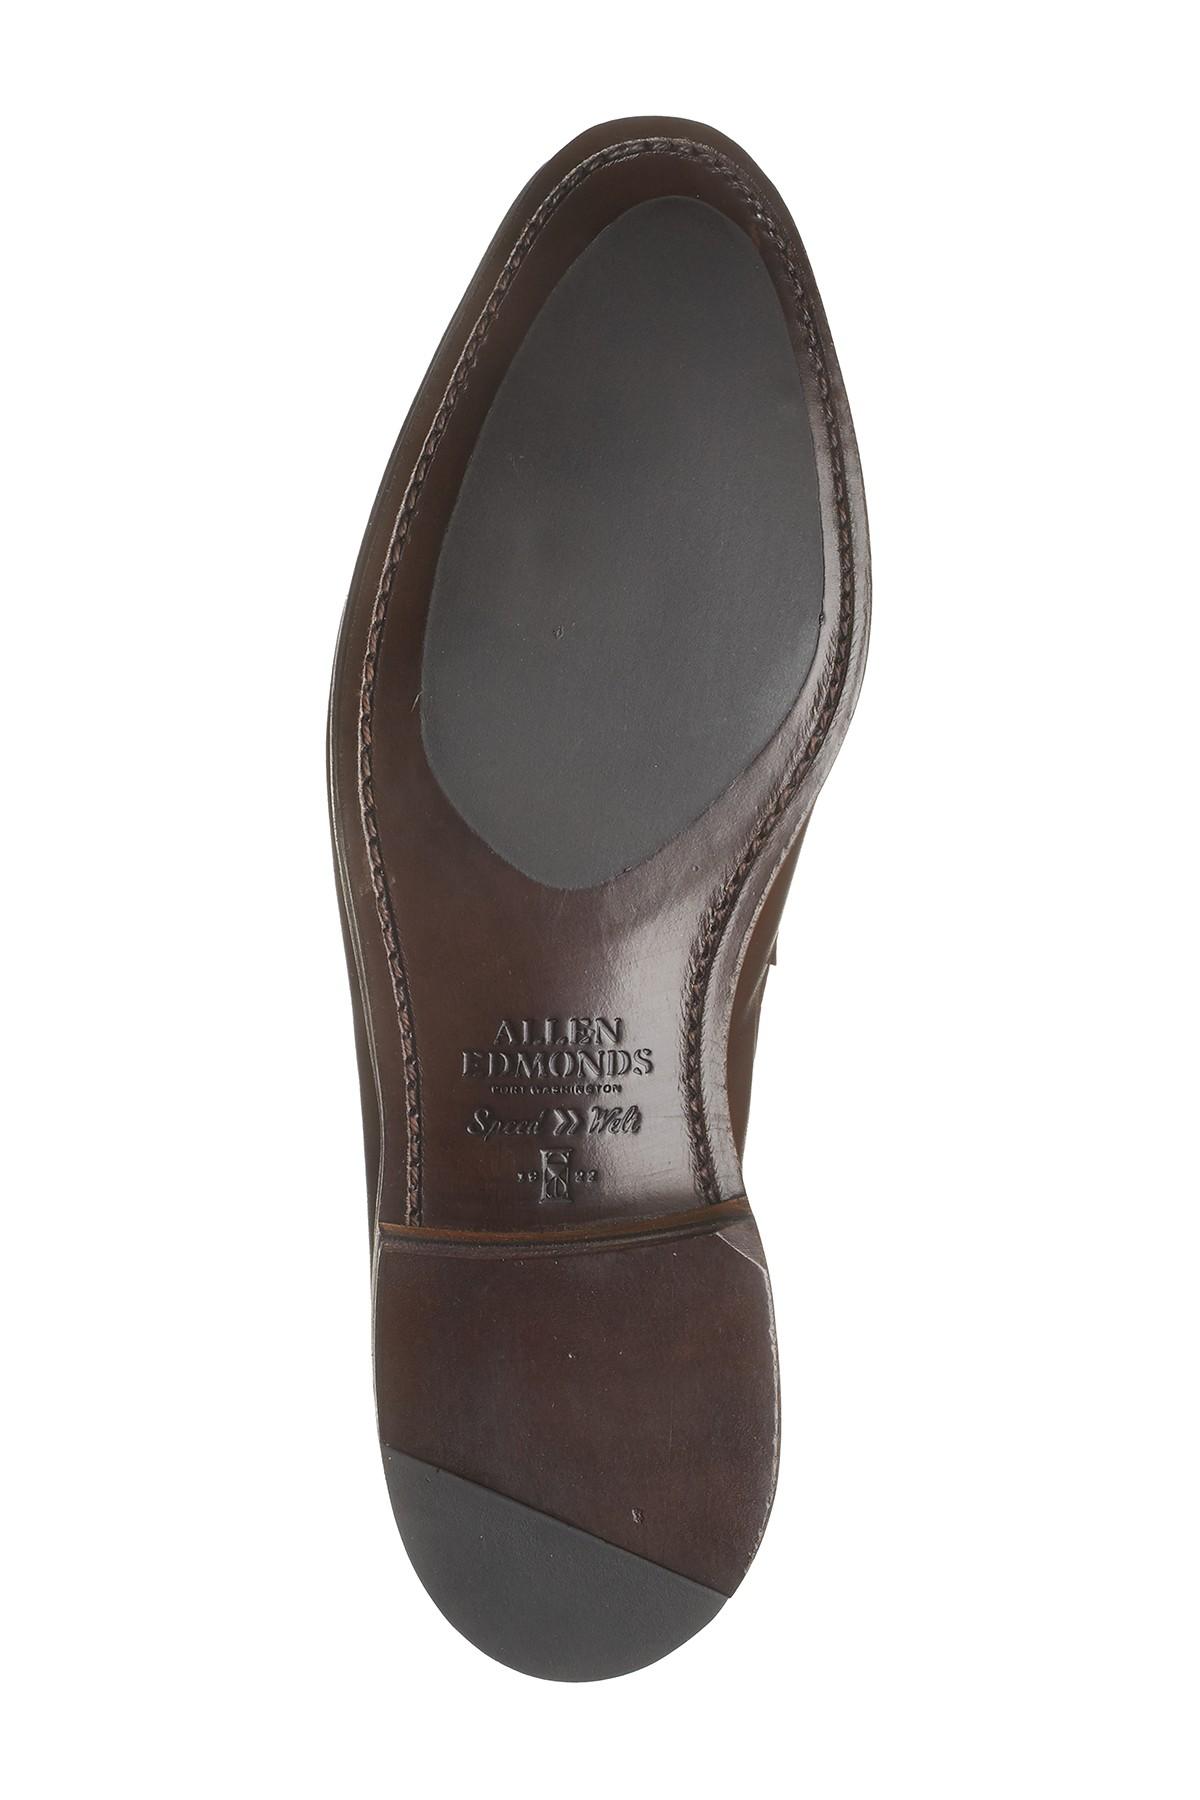 Allen Edmonds Leather Mercer Penny Loafer - Wide Width Available in ...